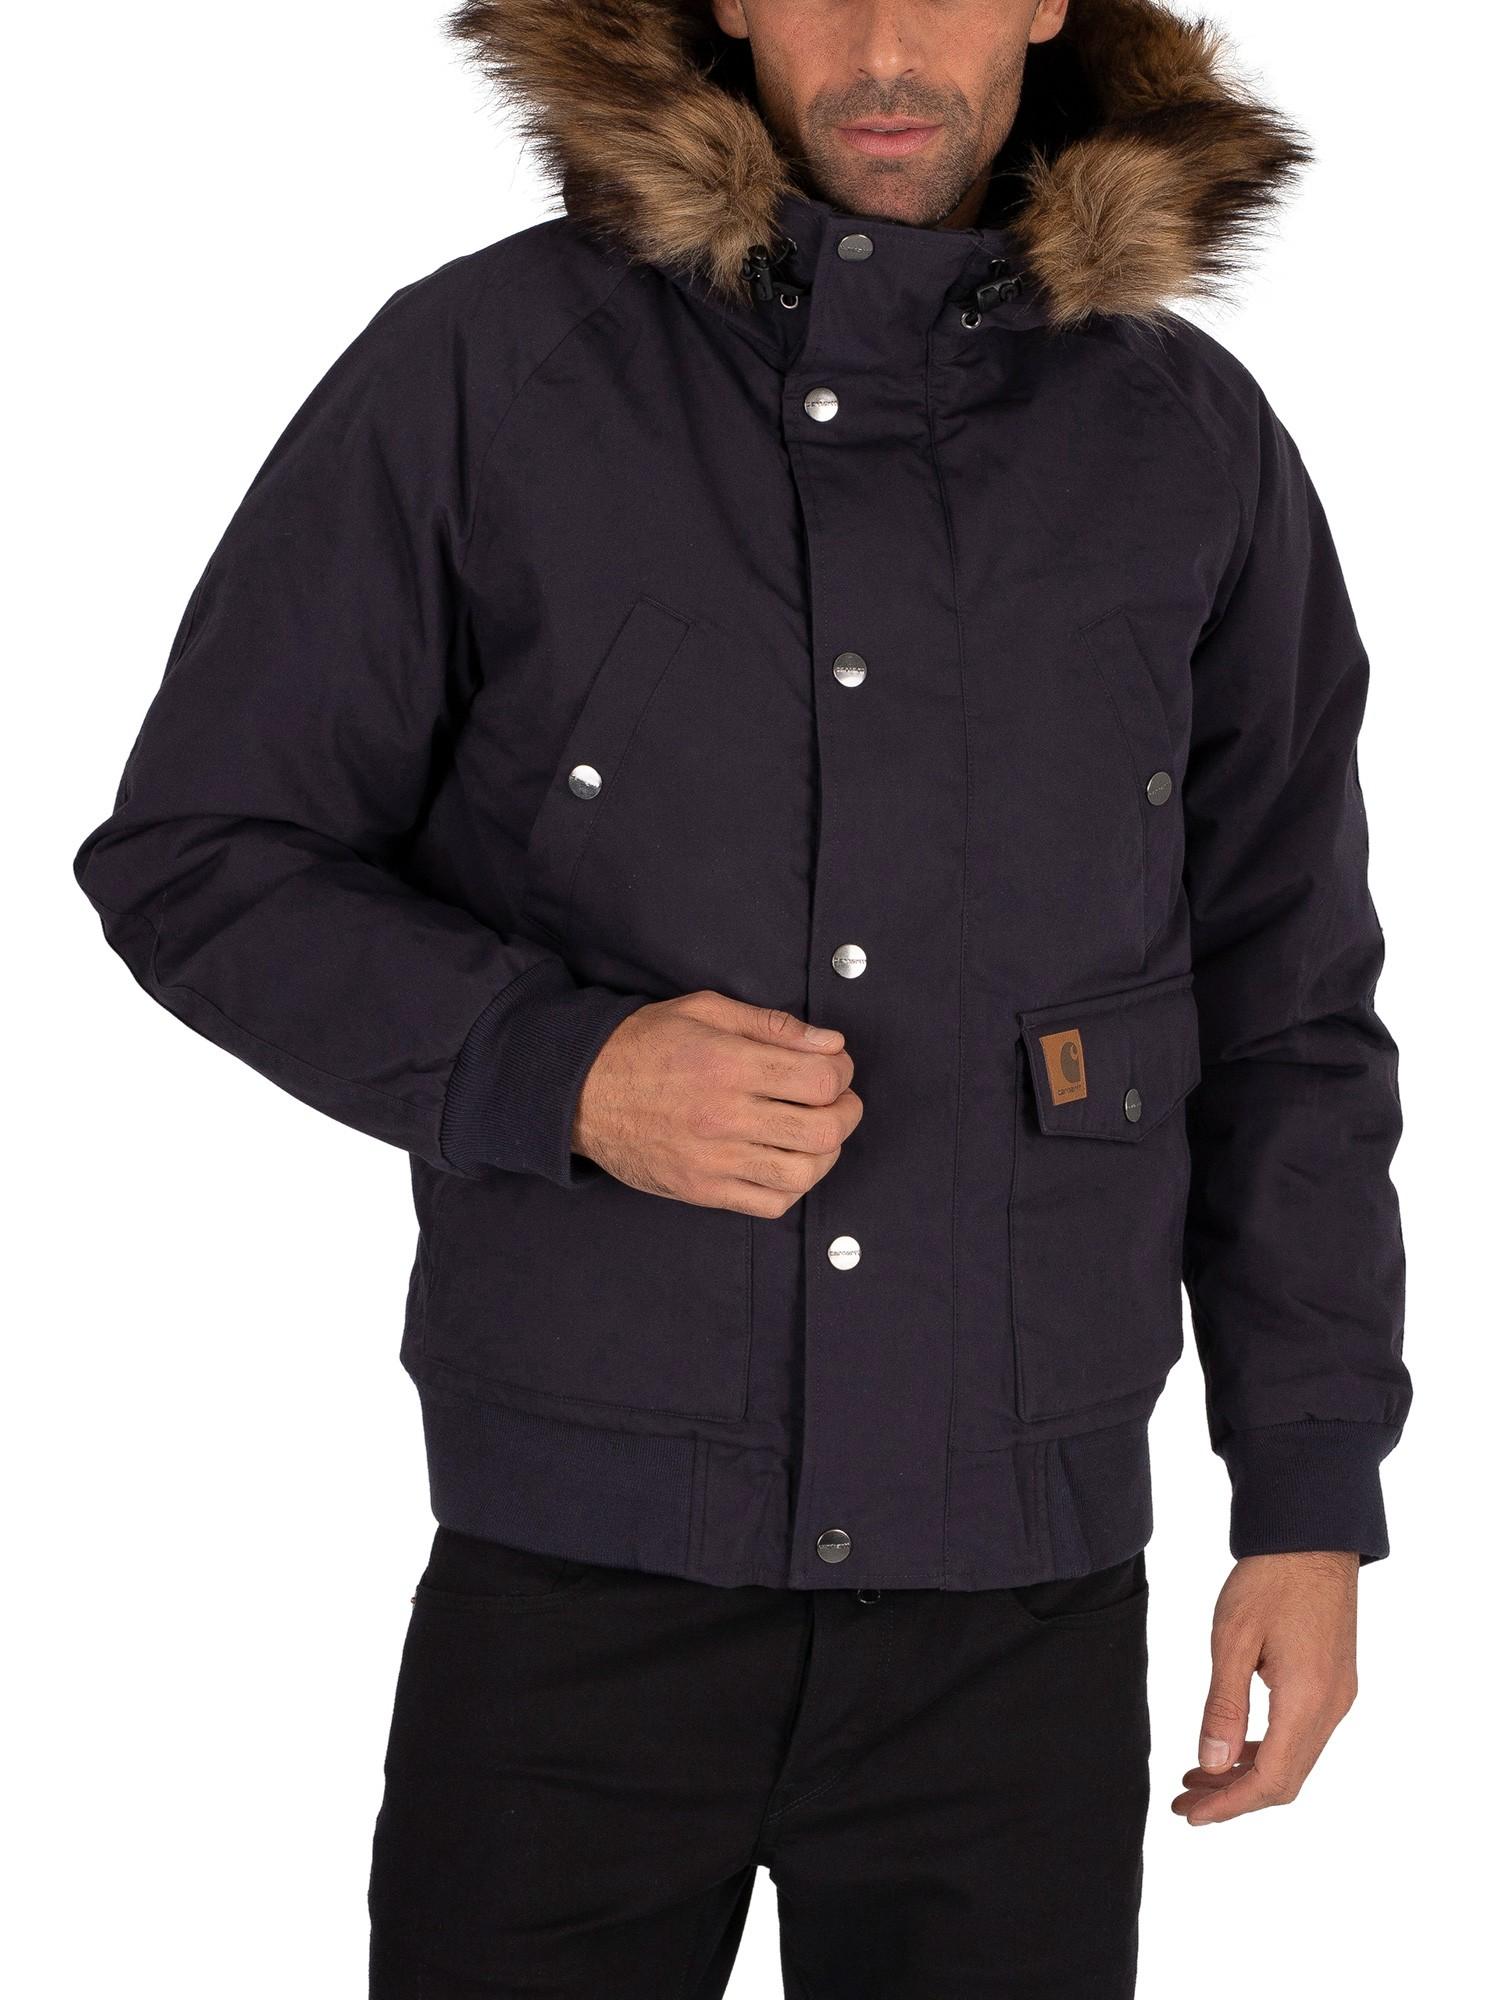 Carhartt WIP Synthetic Trapper Parka Jacket in Dark Navy/Black 